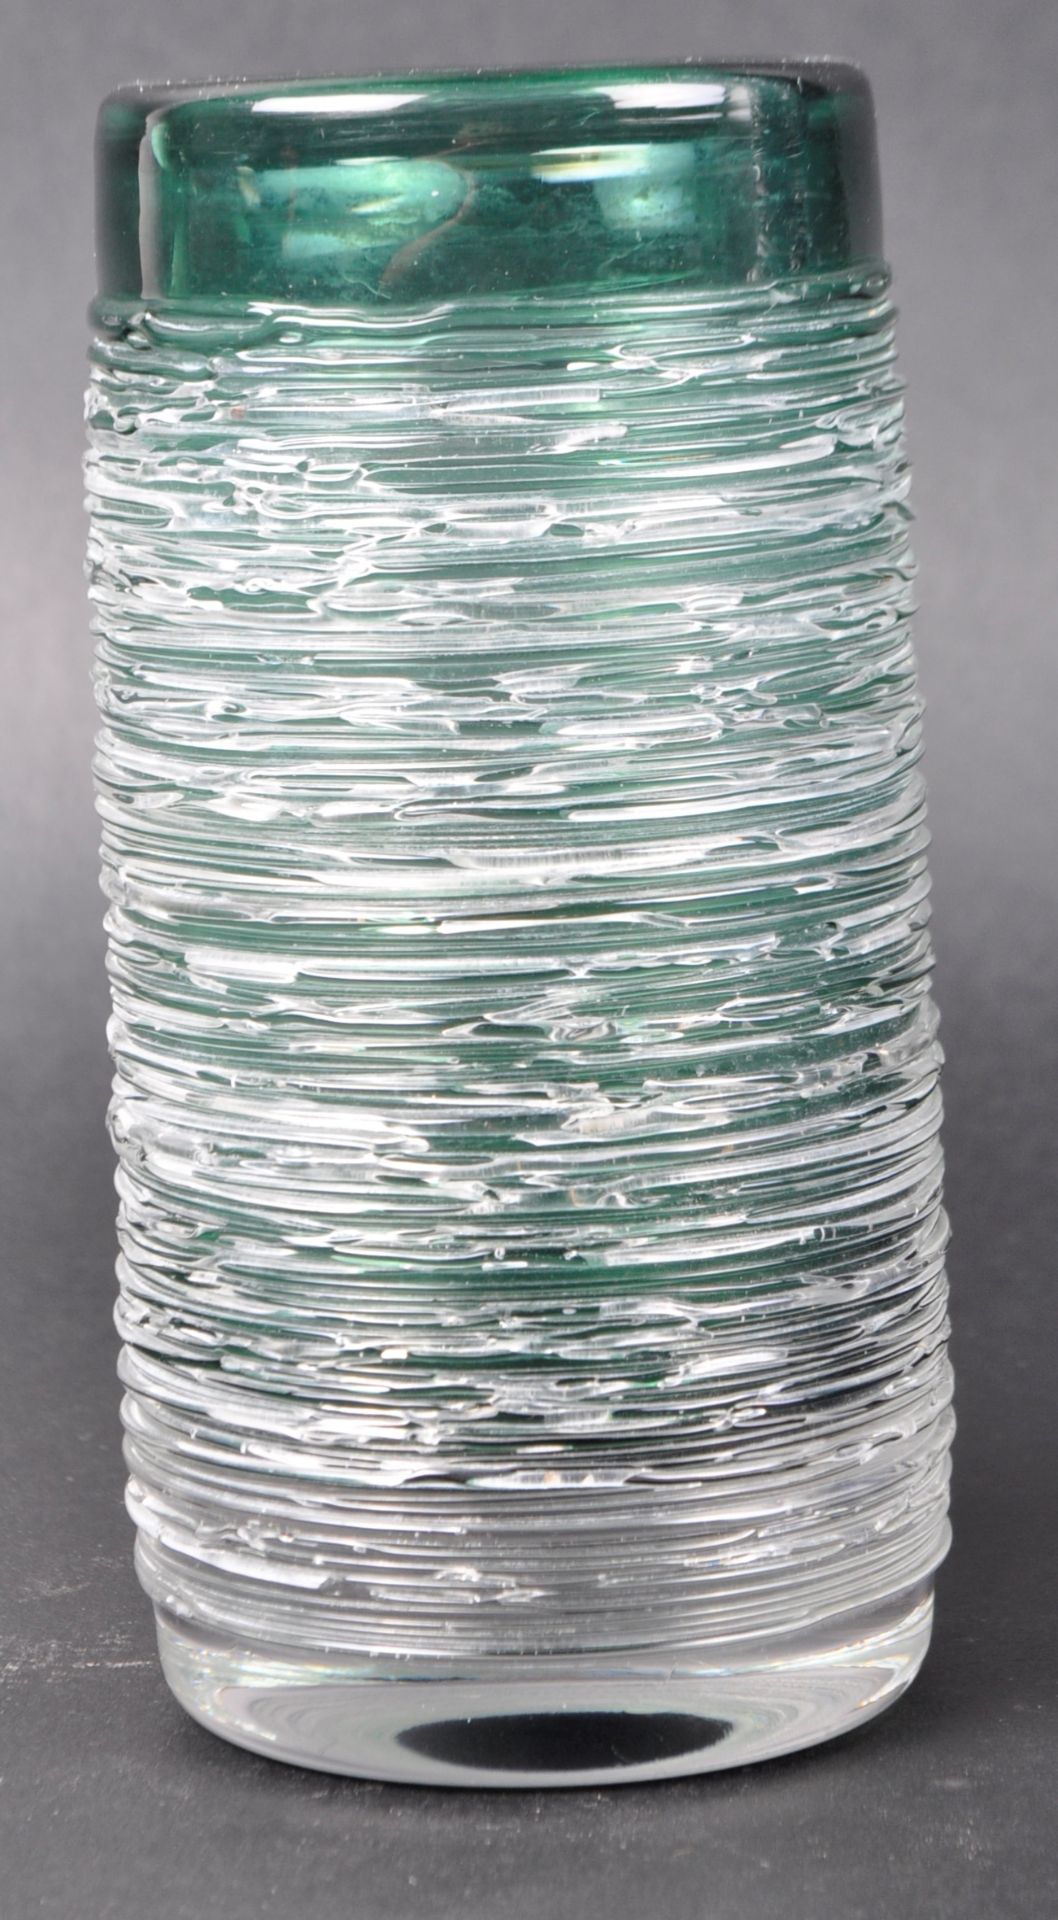 BENGT EDENFALK FOR SKRUF - A TRIO OF SPUN STUDIO ART GLASS VASES - Image 6 of 9